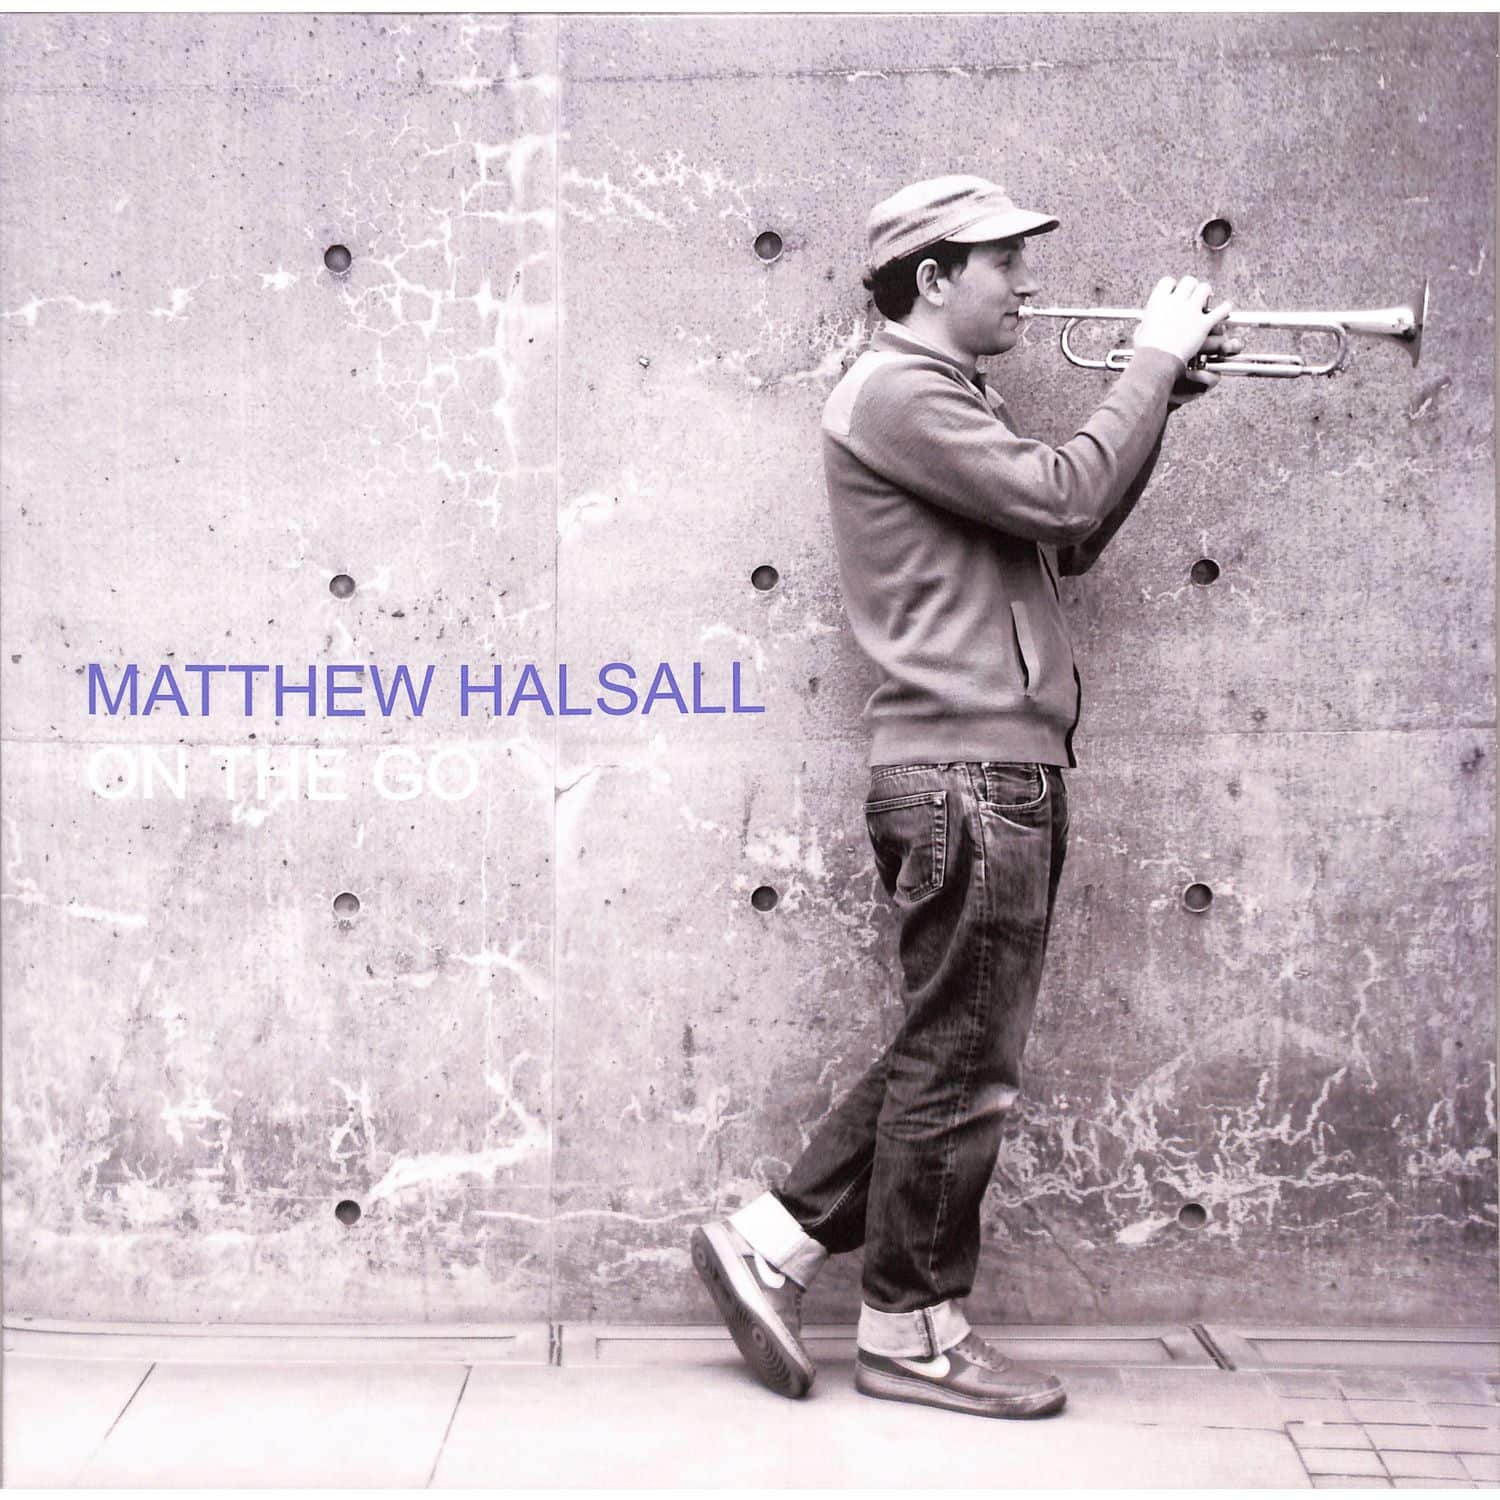 Matthew Halsall - ON THE GO 